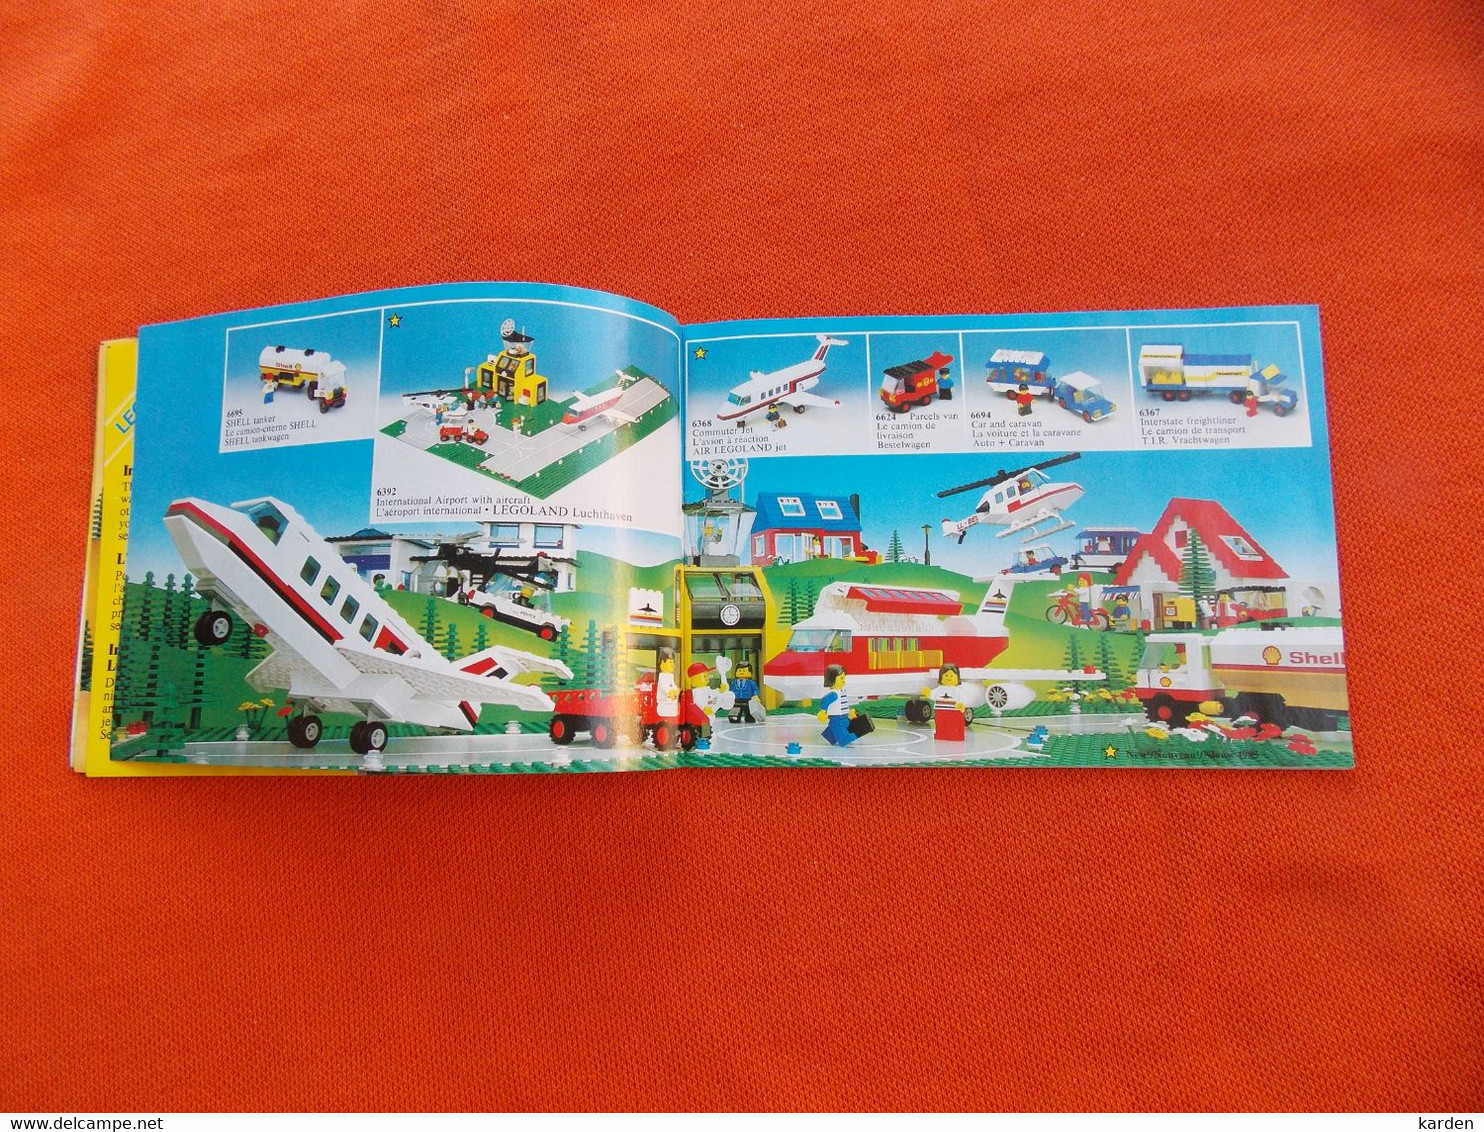 Lego catalogus Legoland 109378/109478 jaren '80